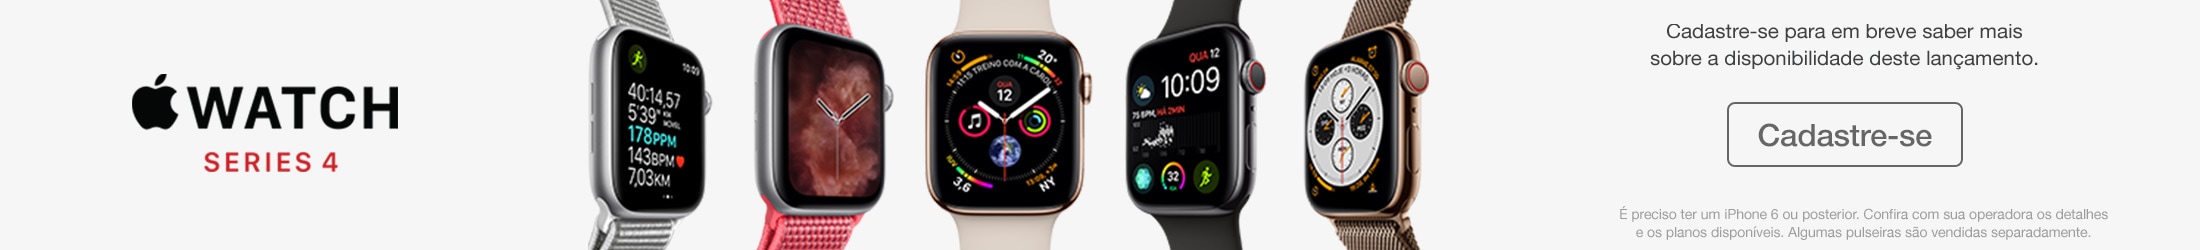 Apple Watch Series 4 banner